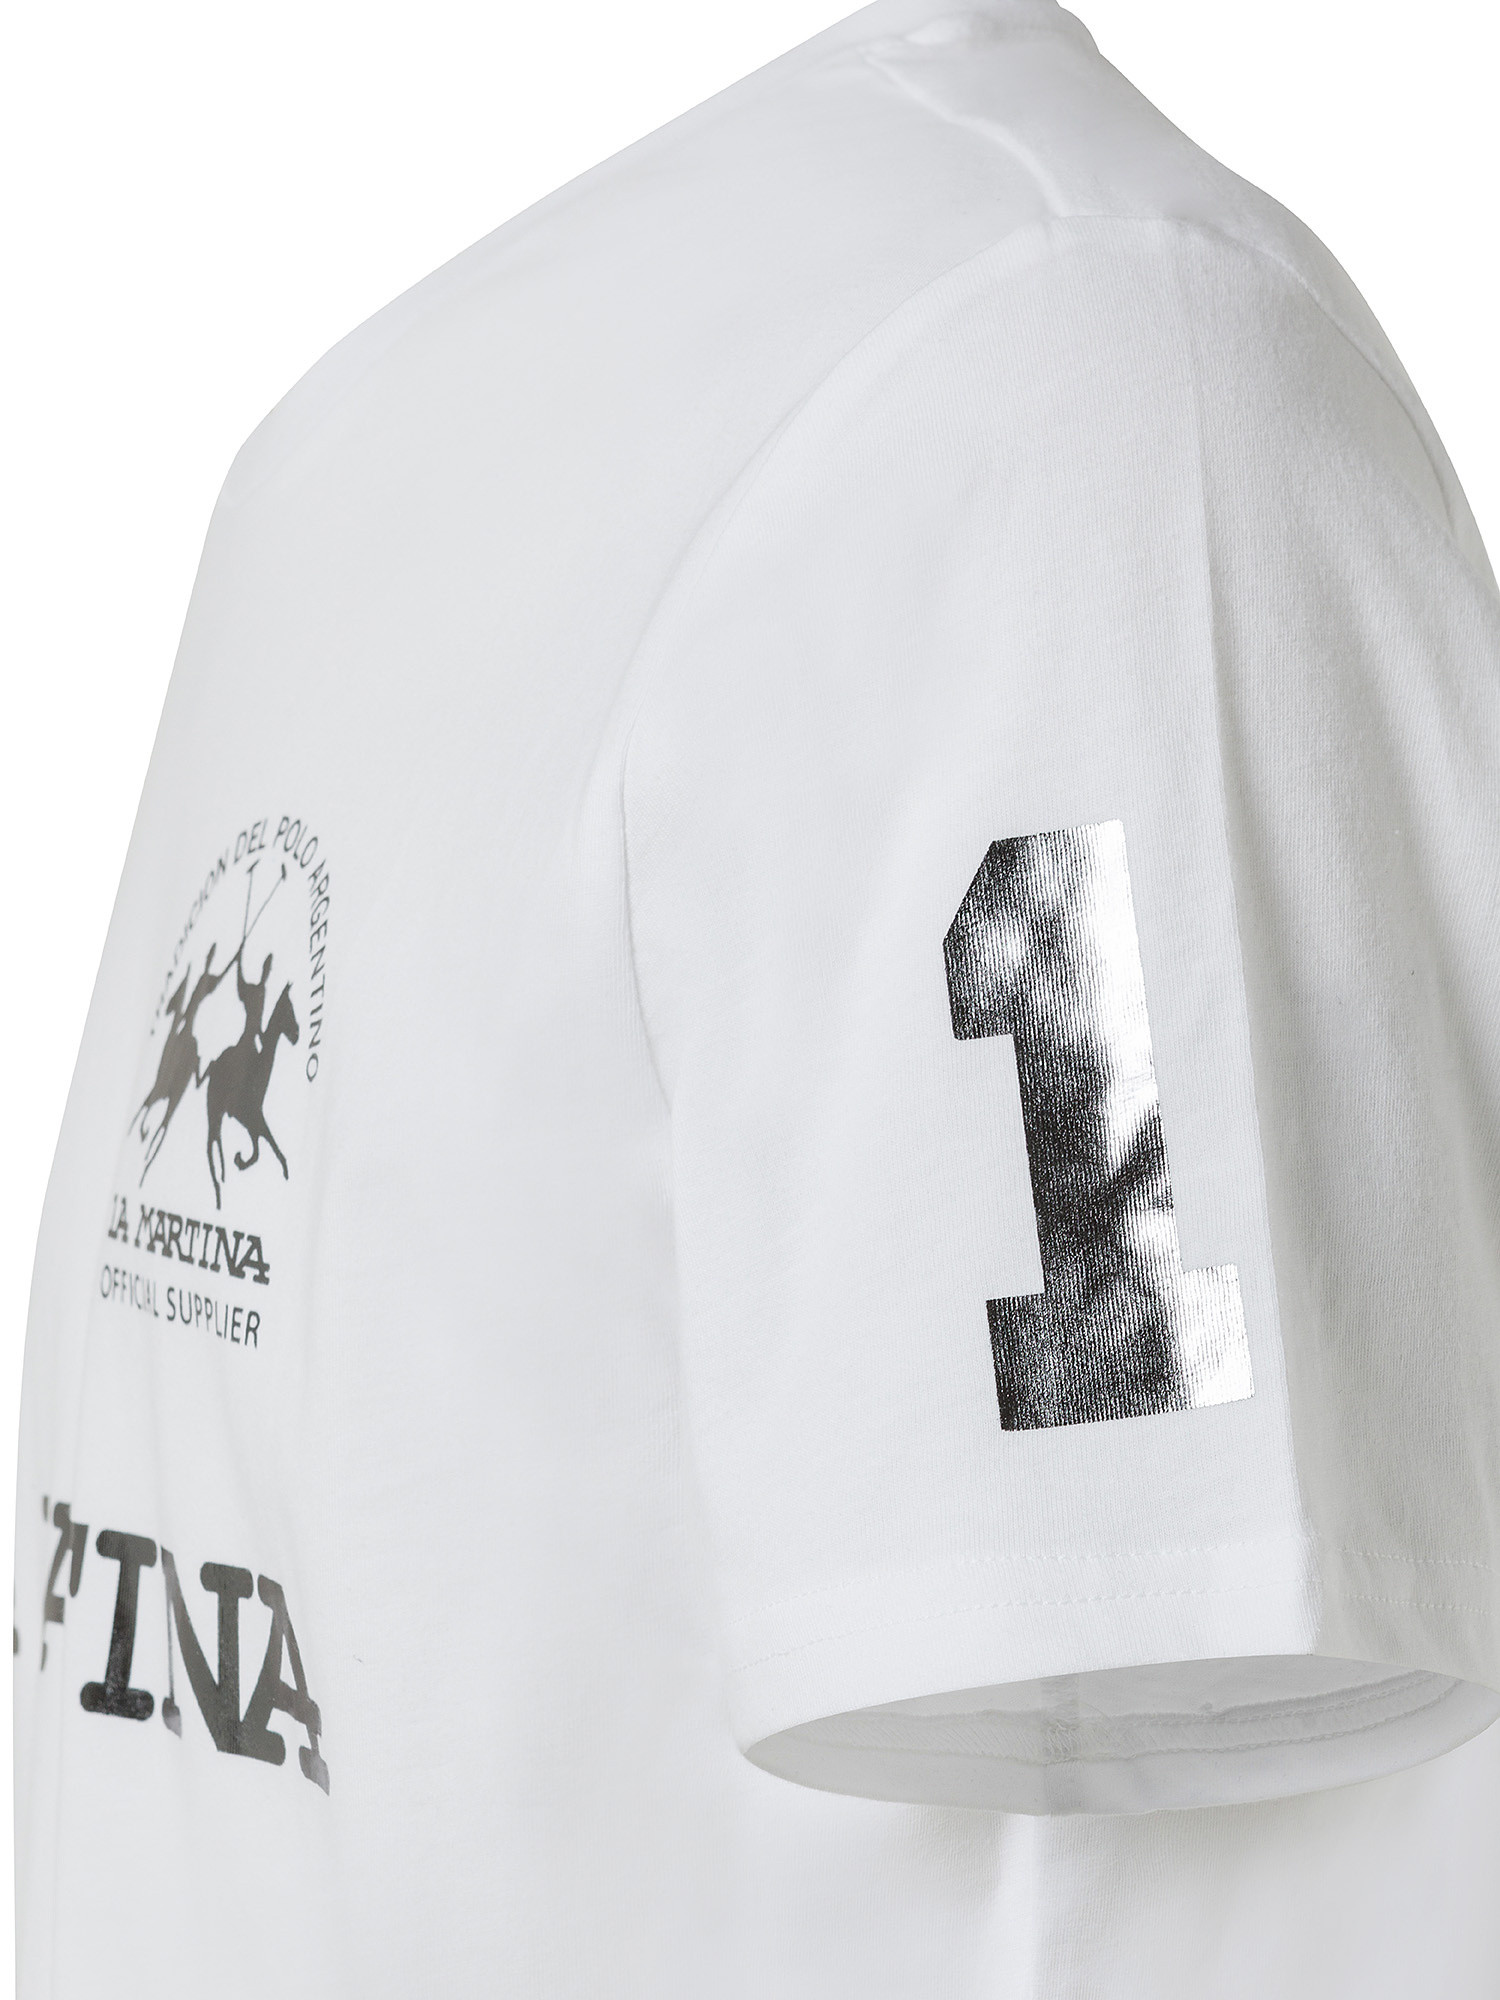 La Martina - T-shirt maniche corte in cotone jersey, Bianco, large image number 2